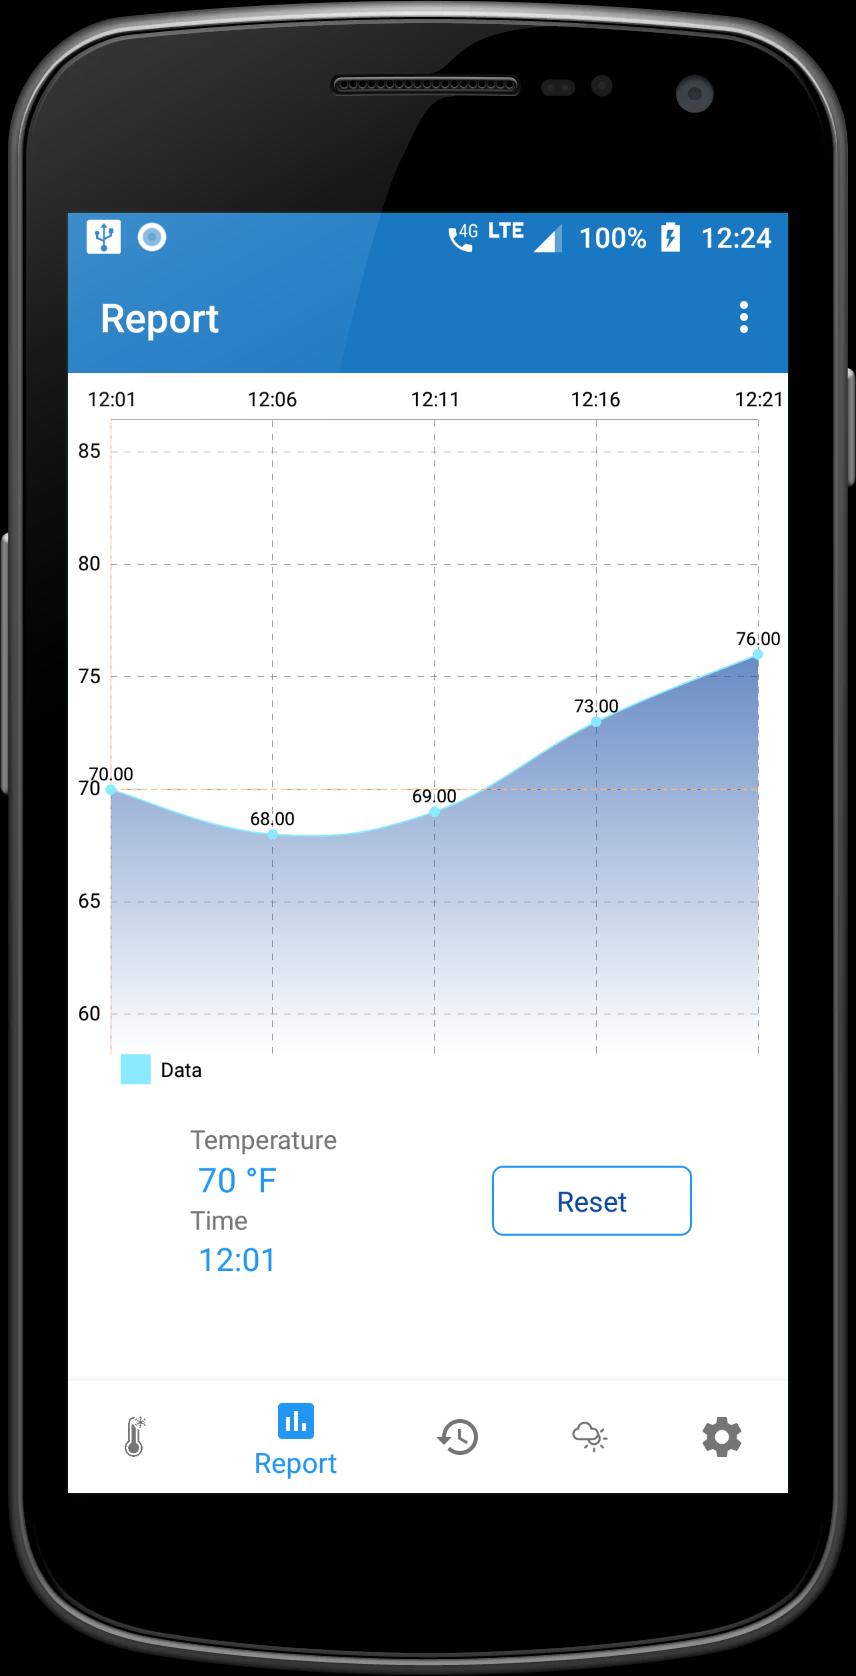 Room temperature Android. Ps4 temperature приложение. Room temperature 22c. Promoboth for Test temperature 3d. Https portal fpc temp app apk